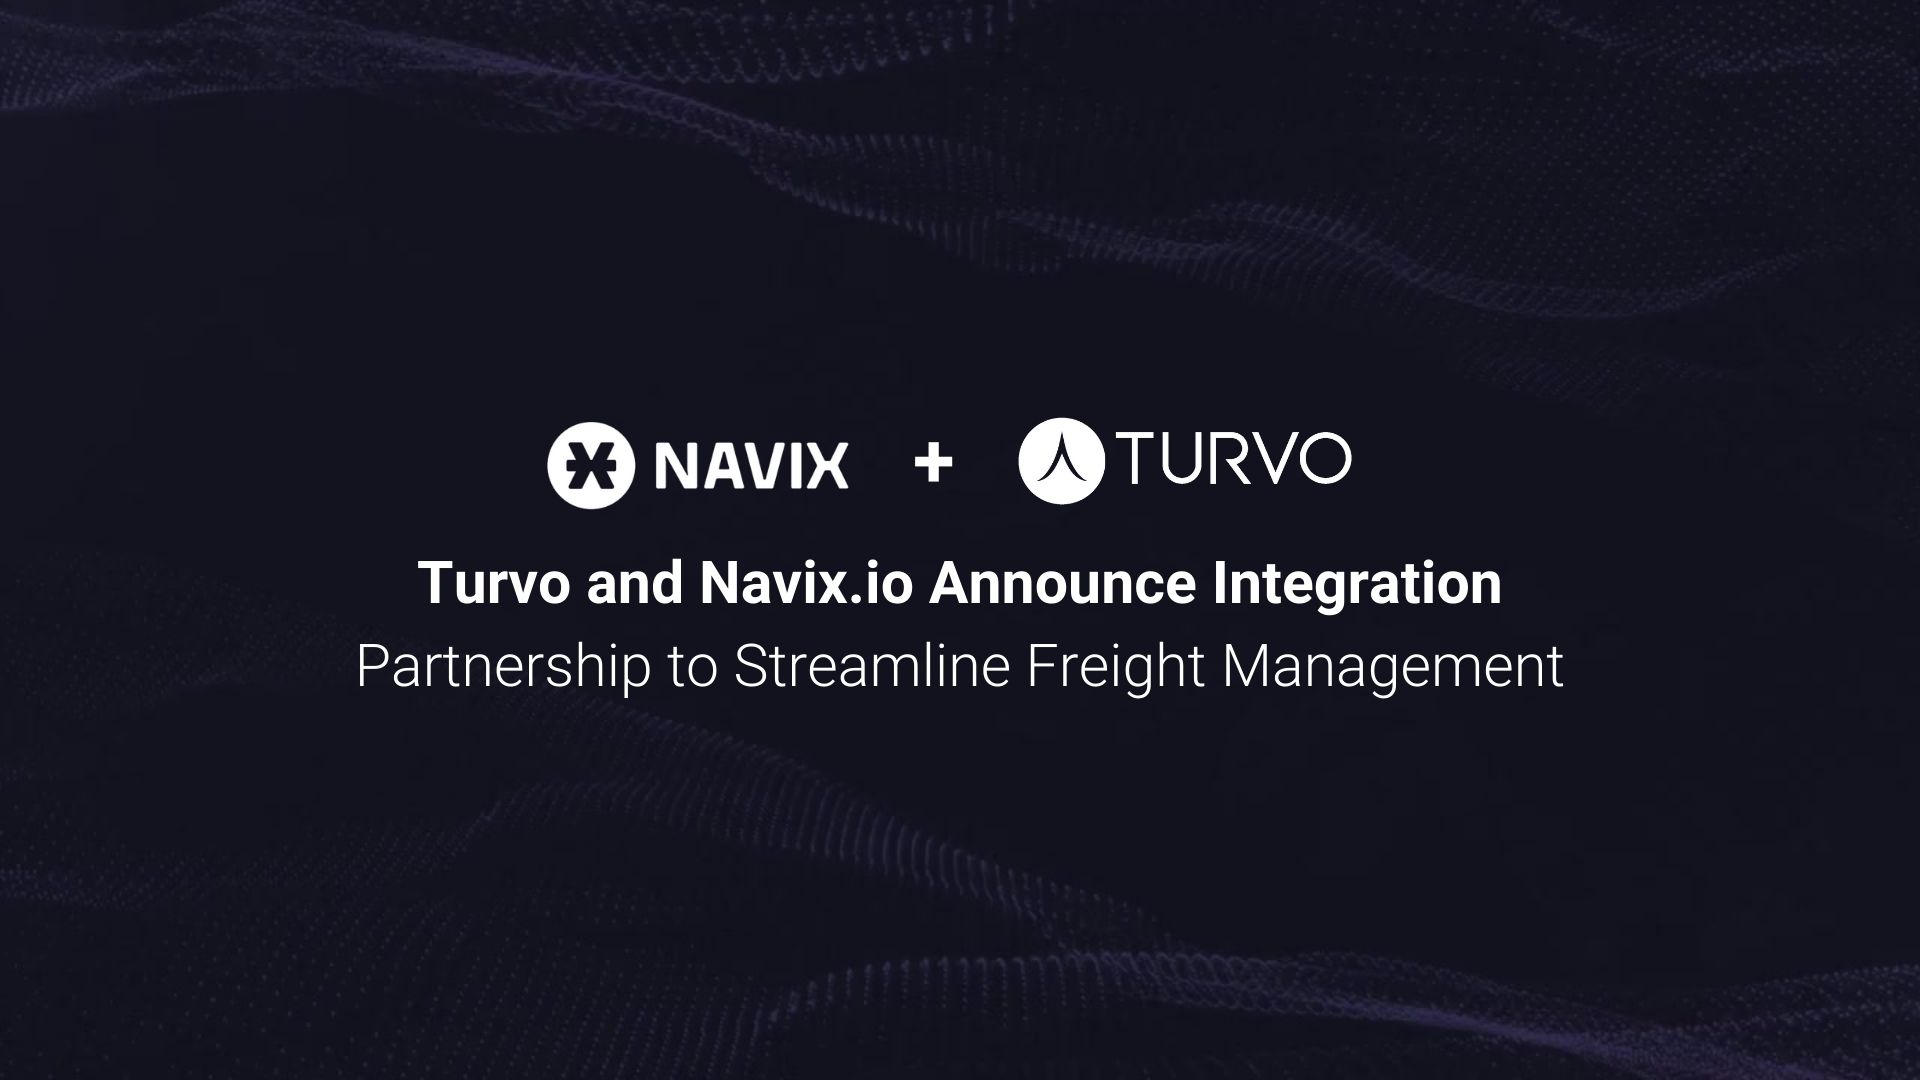 Navix + Turvo Turvo and Navix.io Announce Integration Partnership to Streamline Freight Management